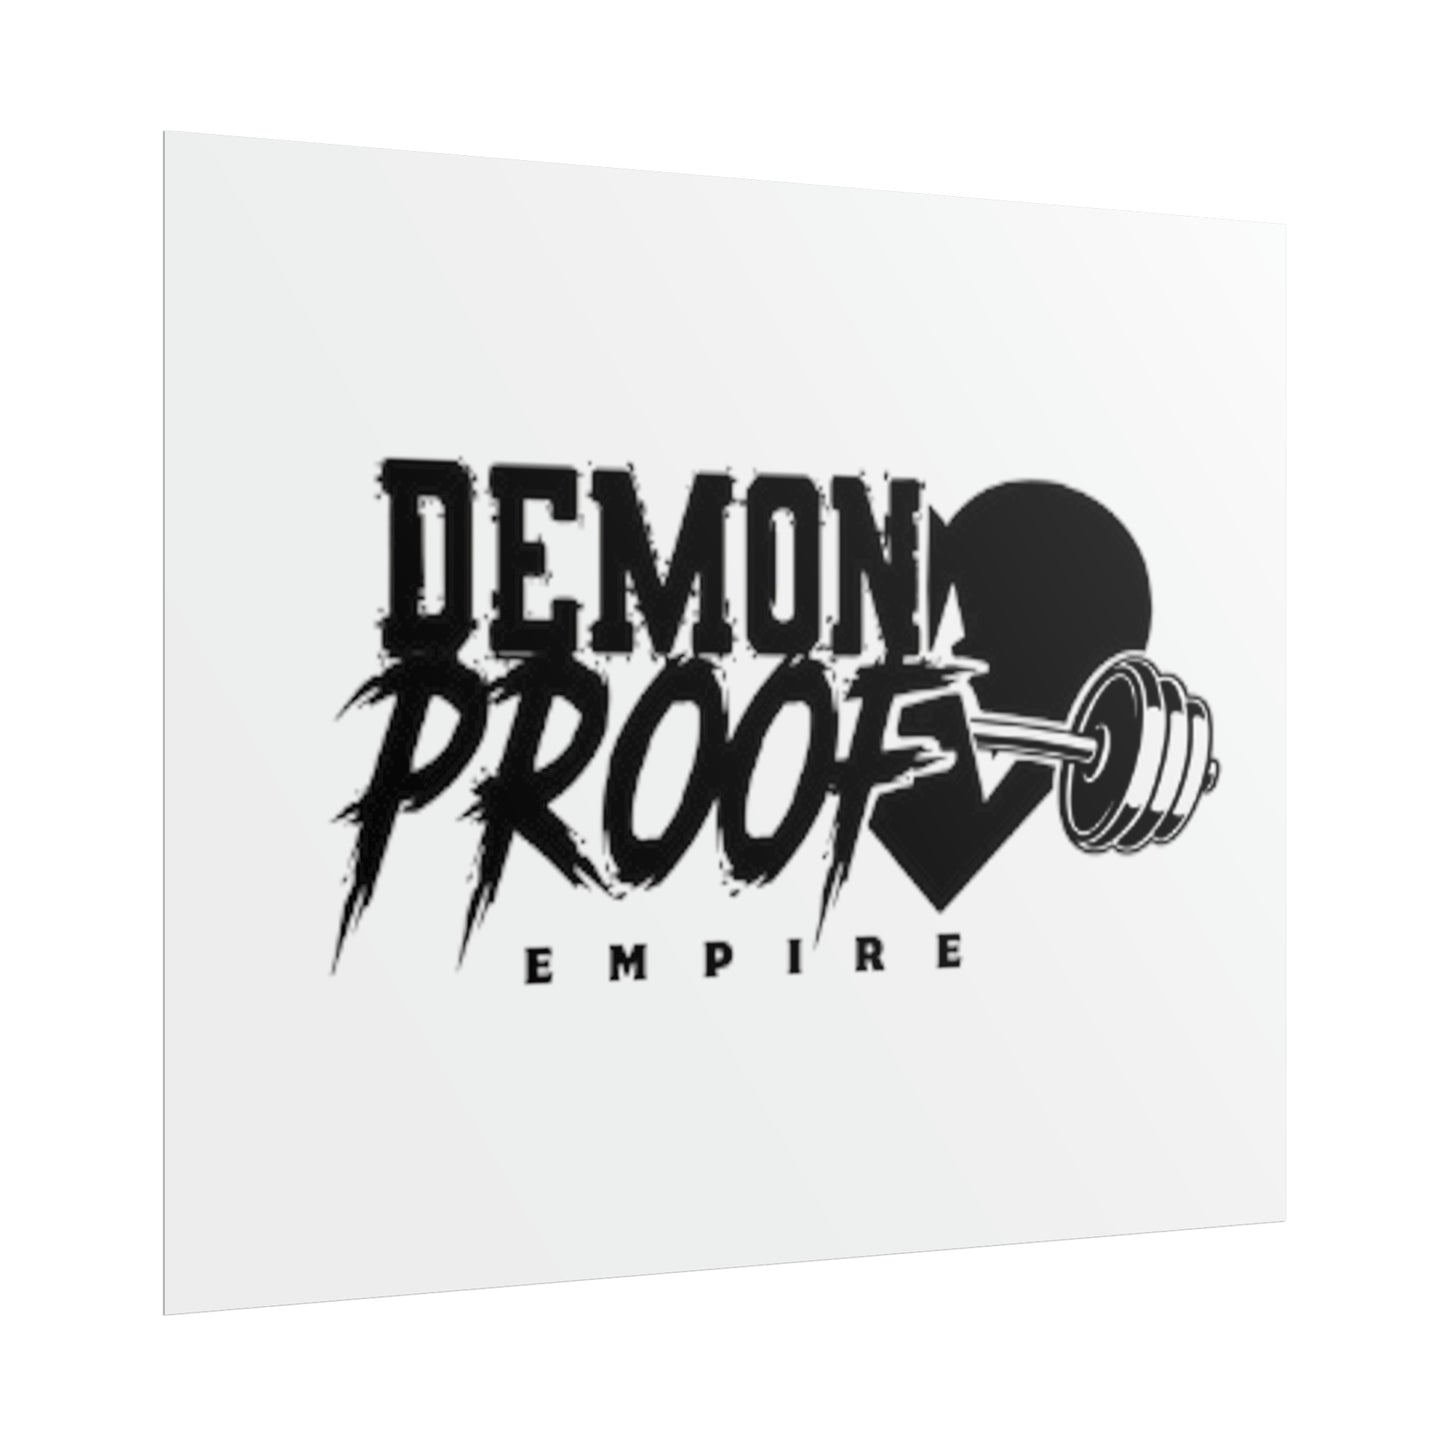 DemonProof Empire Logo Poster